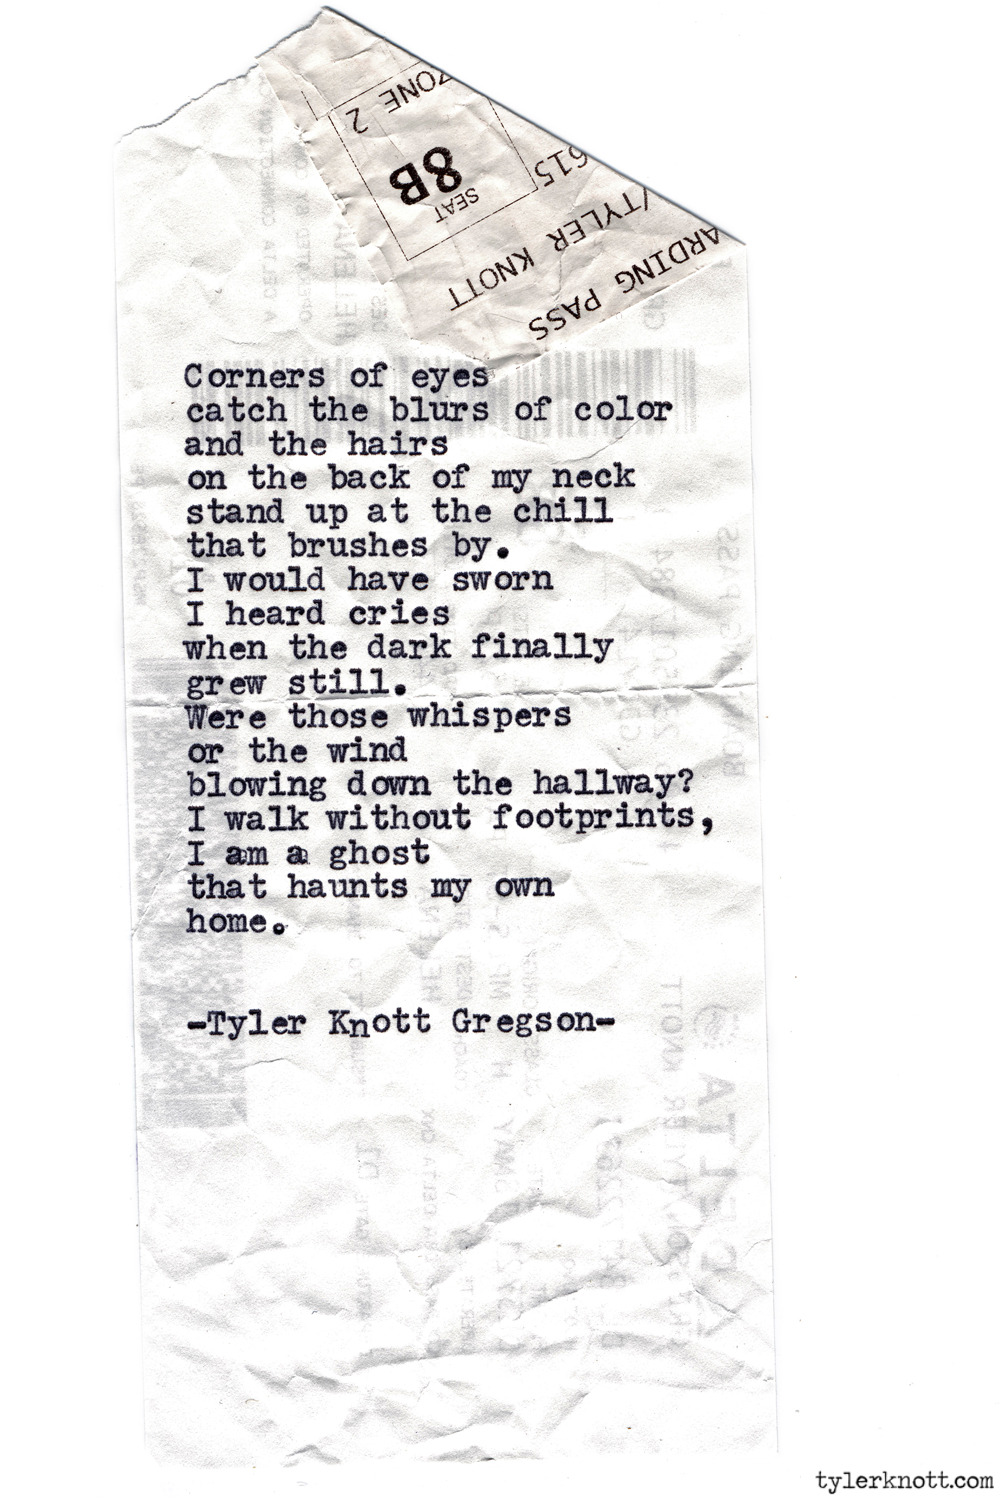 Tyler Knott Gregson — Typewriter Series #801 by Tyler Knott Gregson